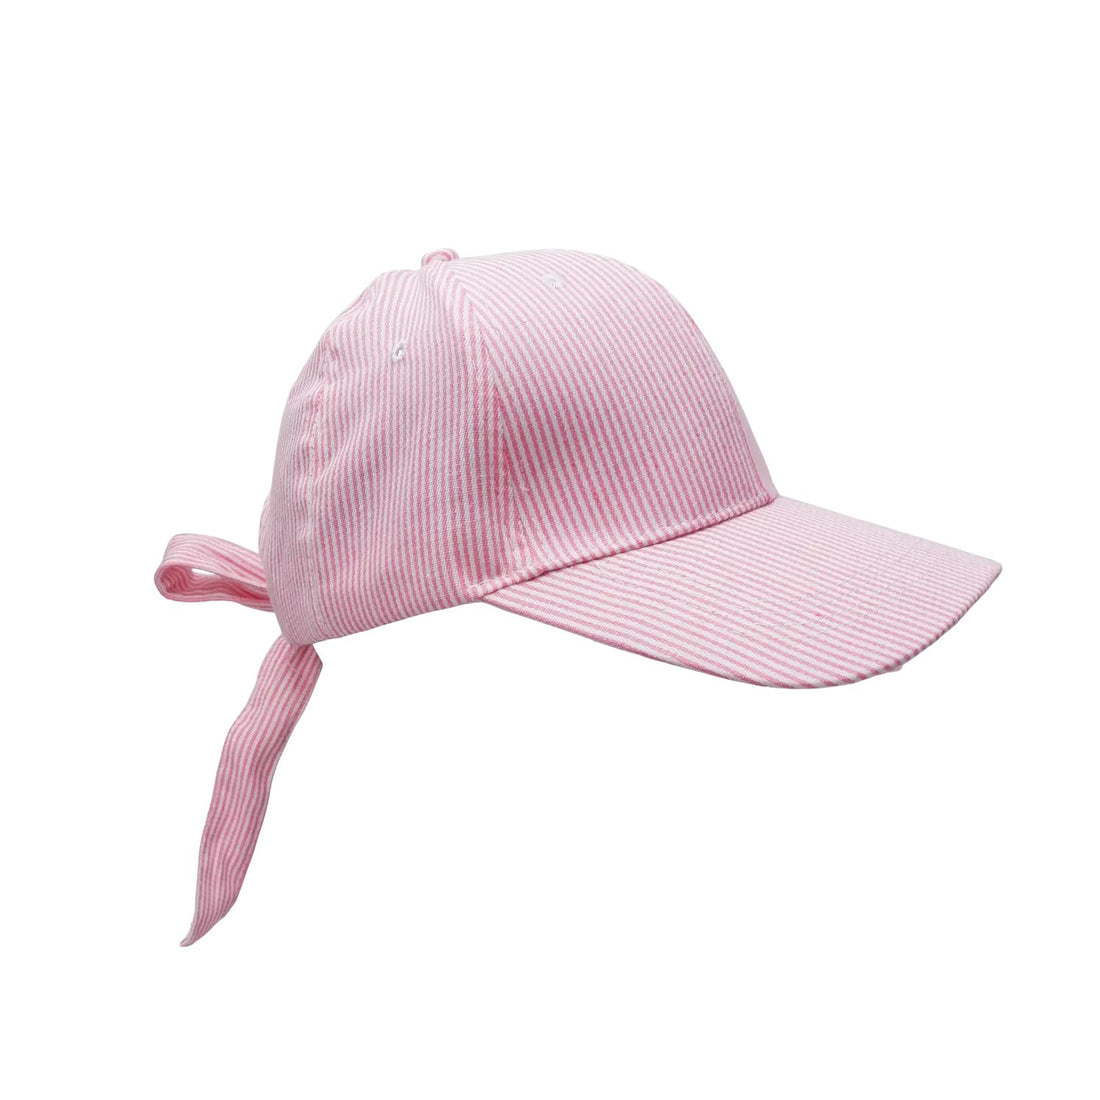 Matilda Bow Cap - Light Pink